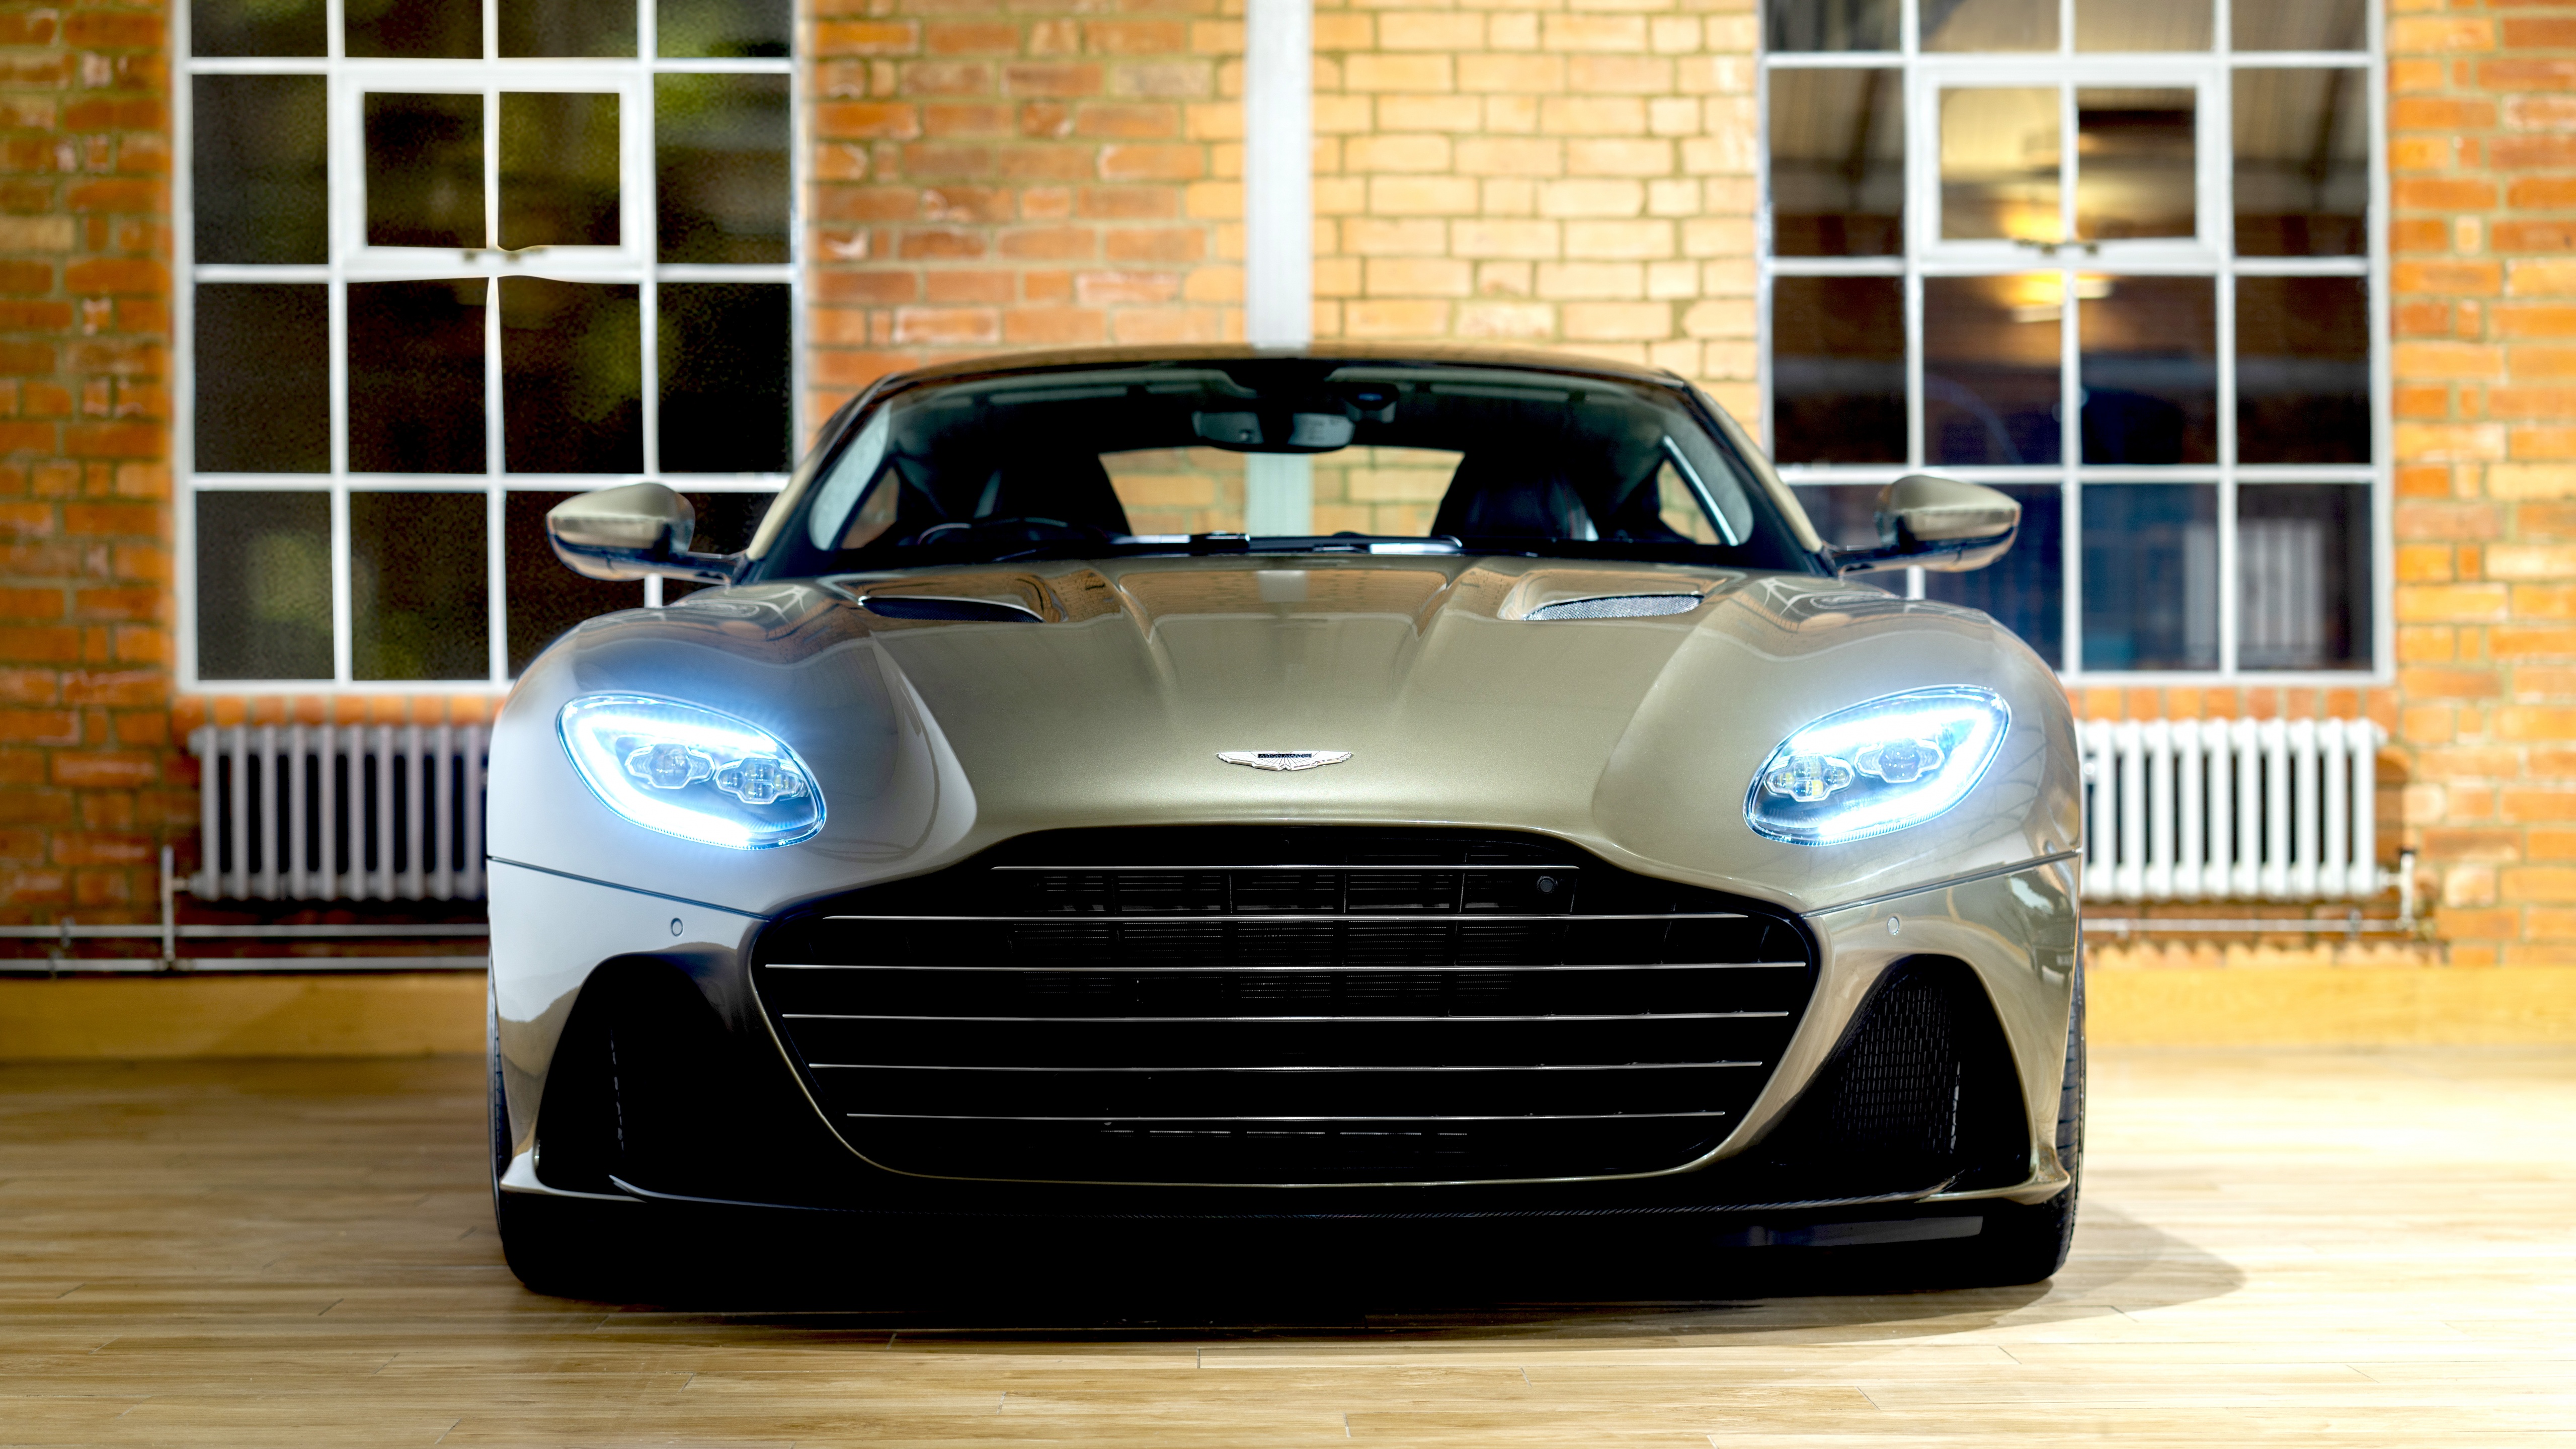 Aston Martin DBS Superleggera Wallpaper 4K, 5K, 8K, Cars, #135